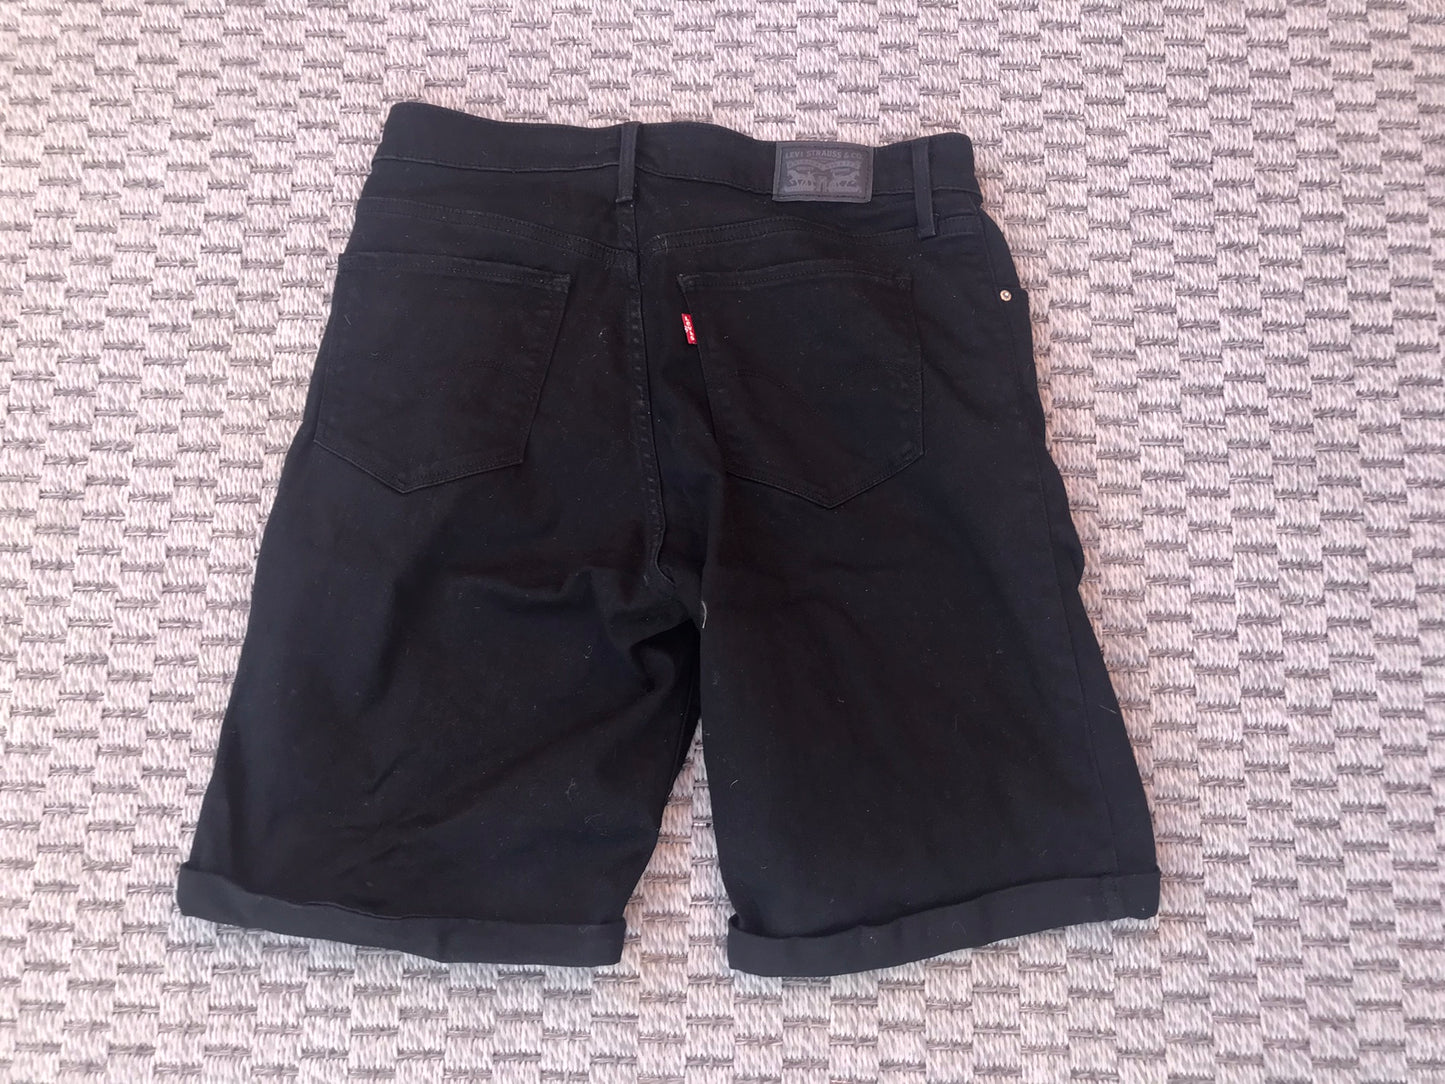 Summer Shorts Ladies Size 16 Levi Bermuda Stretch Black New